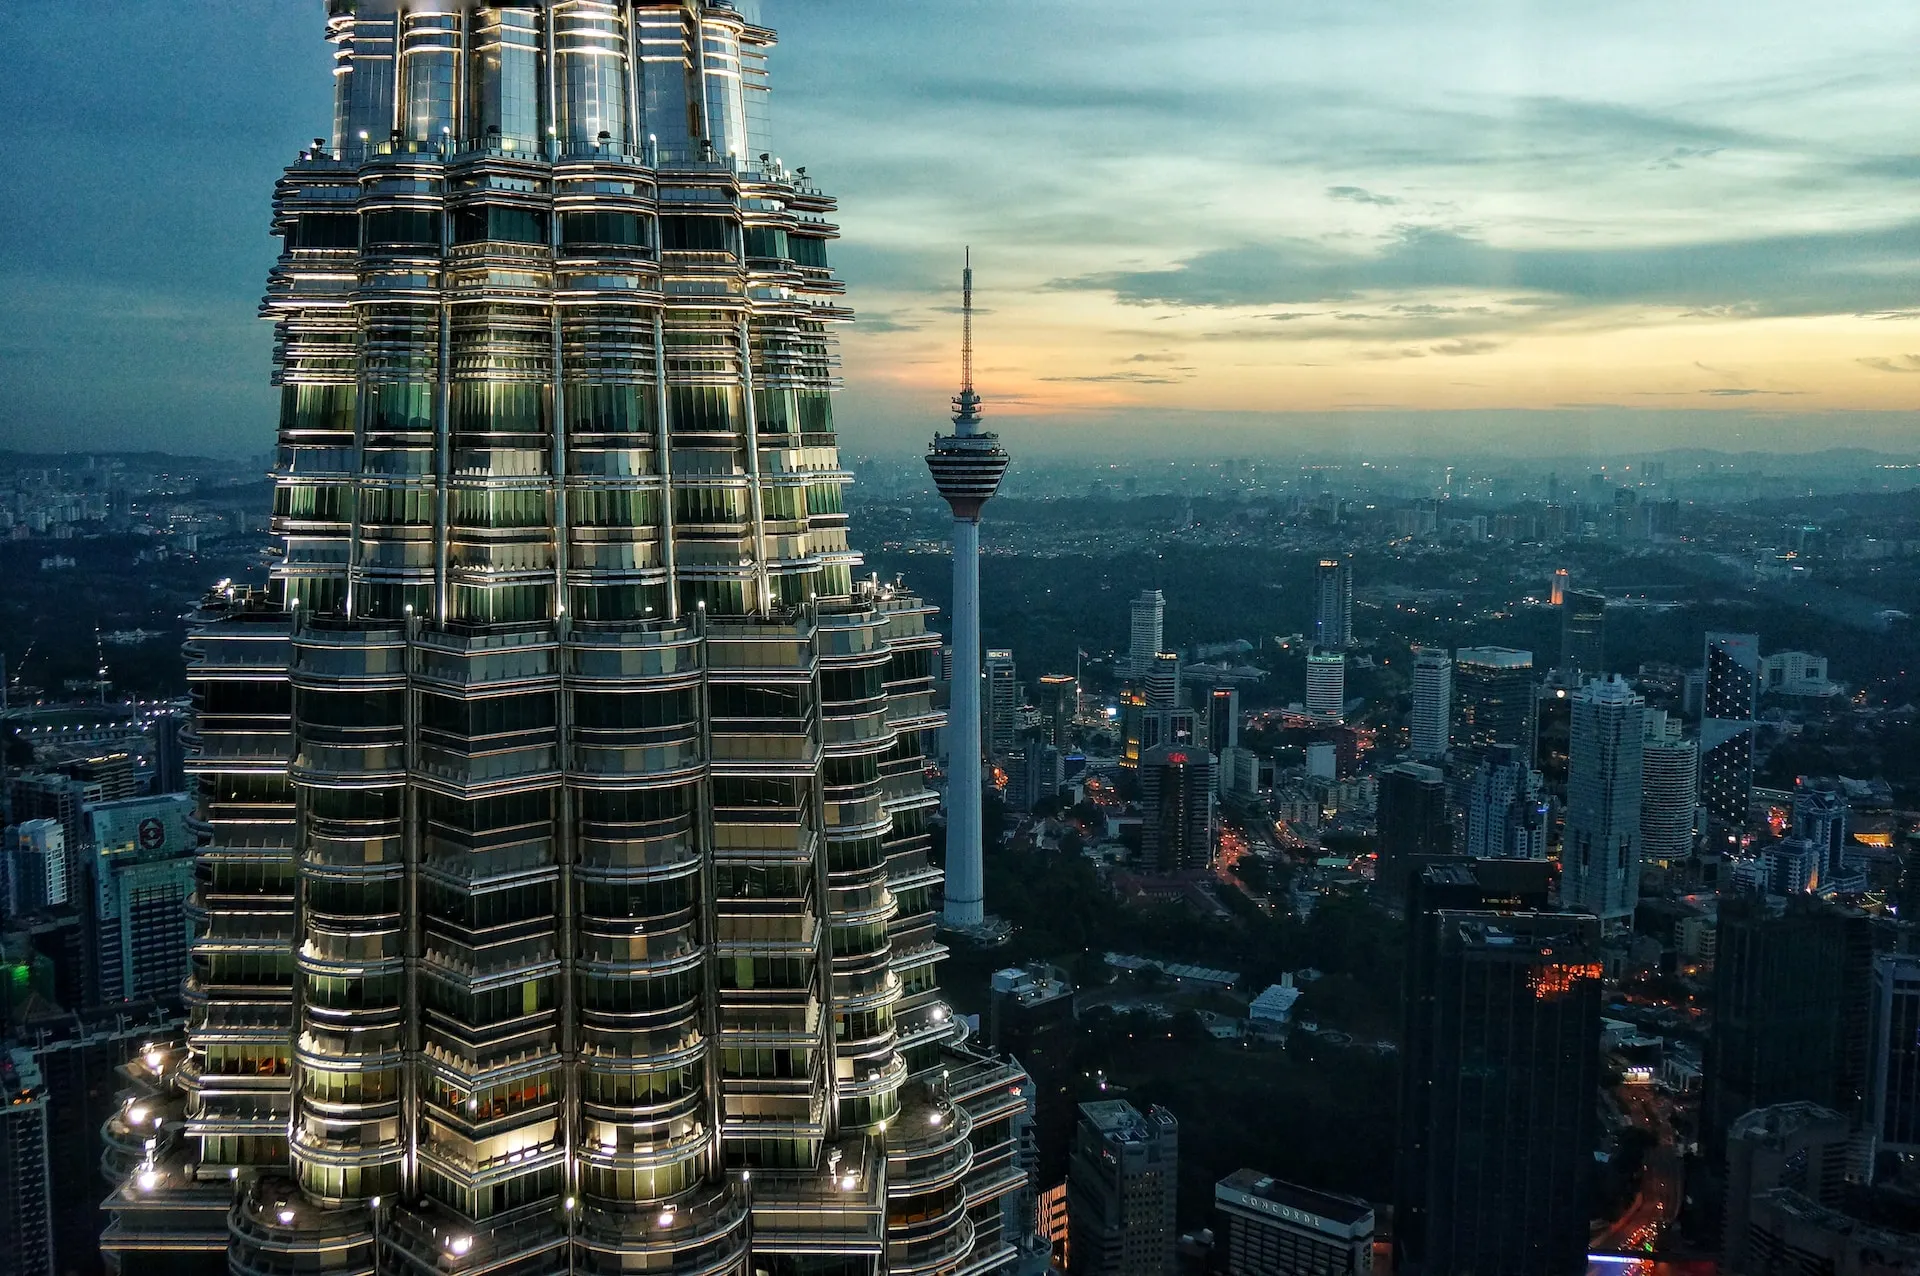 Aerial view of Kuala Lumpur, Source: Photo by Pawel Szymanki on Unsplash